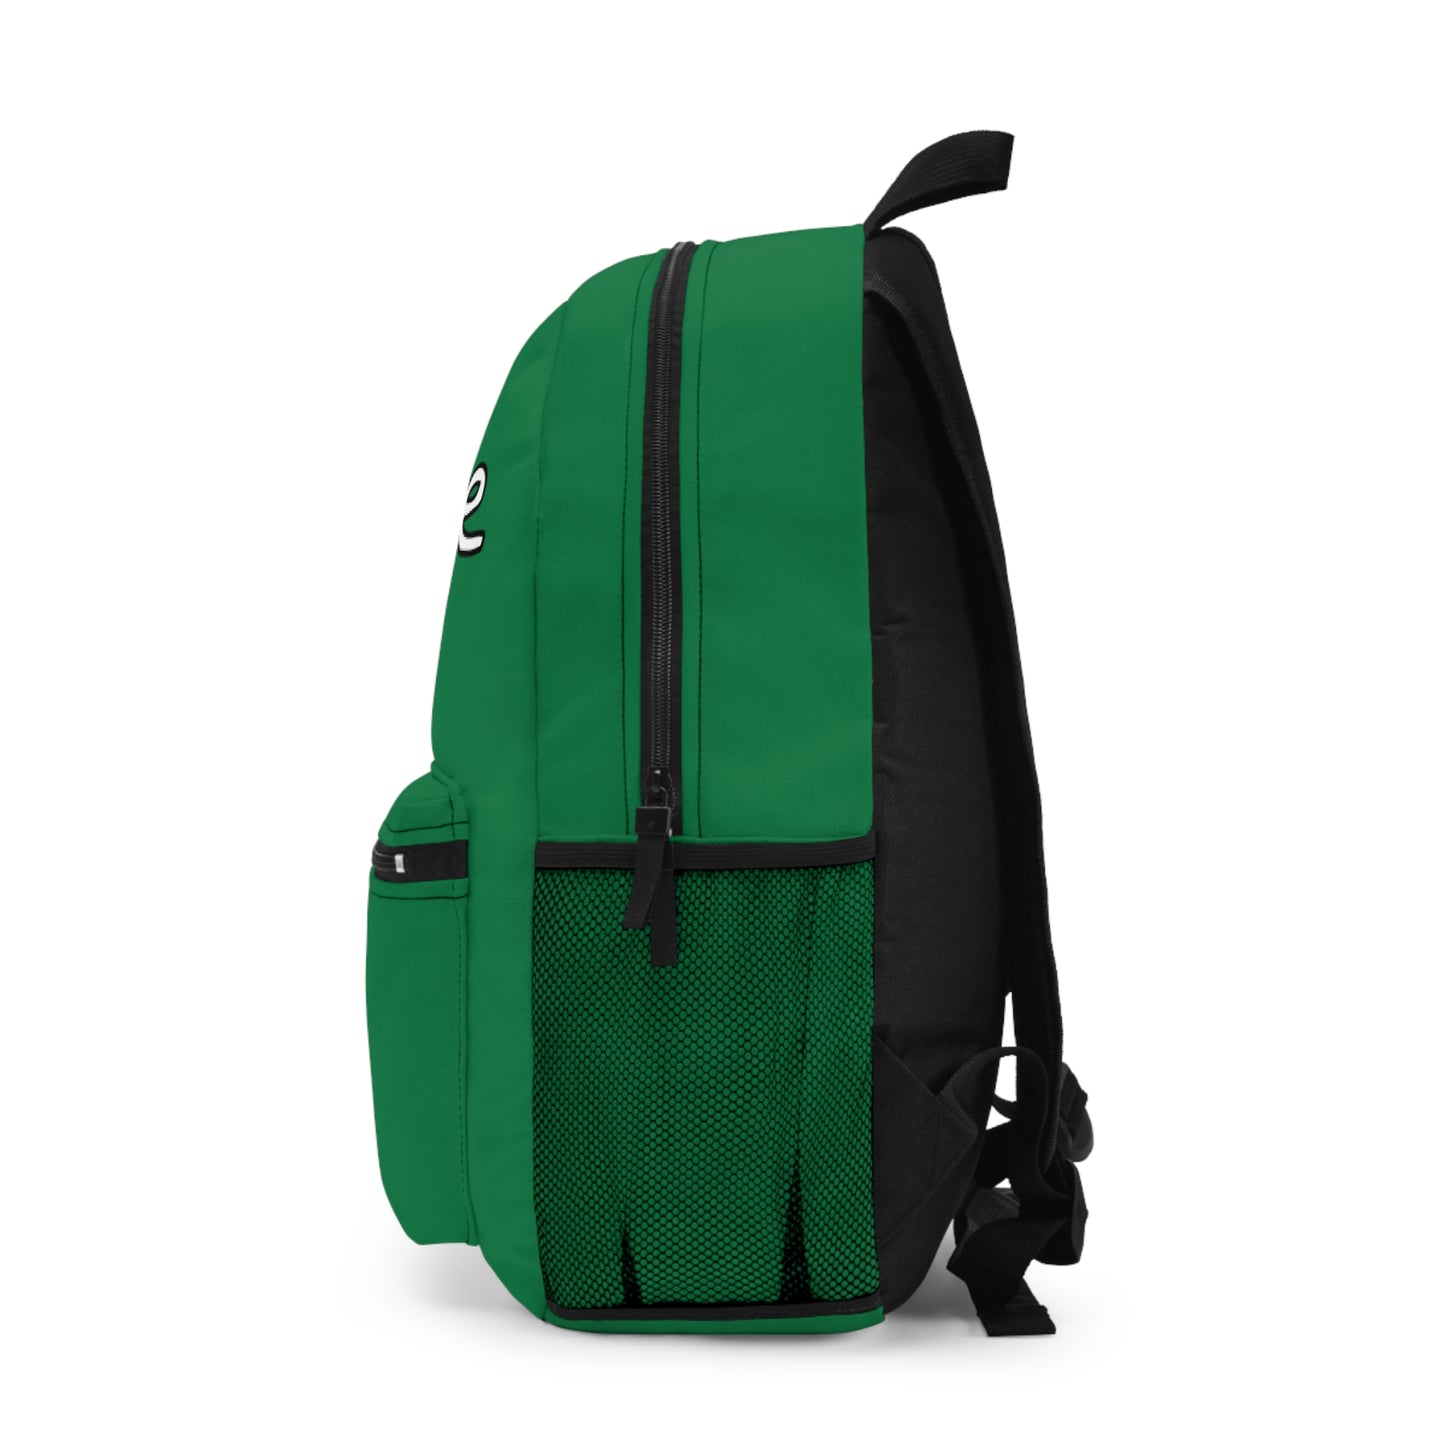 Green/Blue Backpack